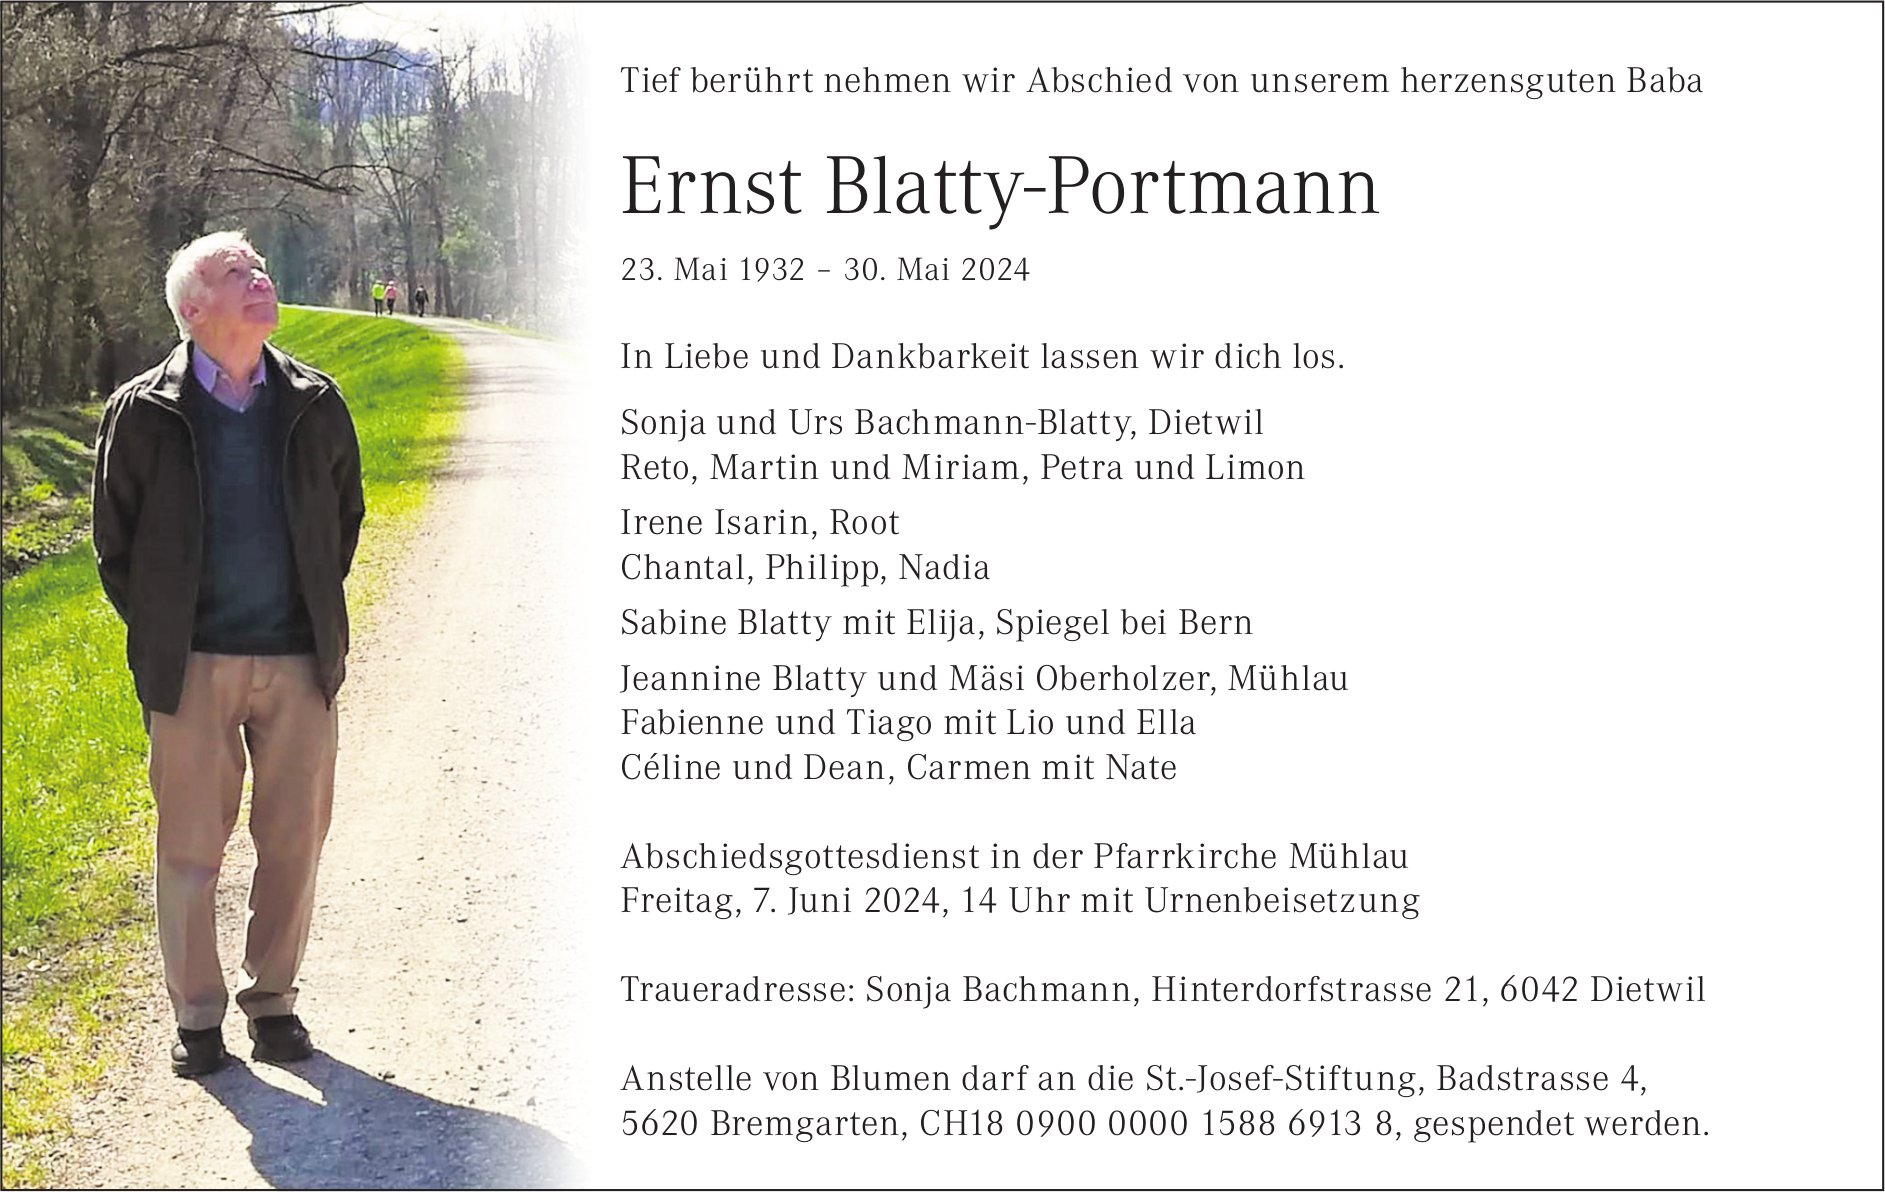 Blatty-Portmann Ernst, Mai 2024 / TA